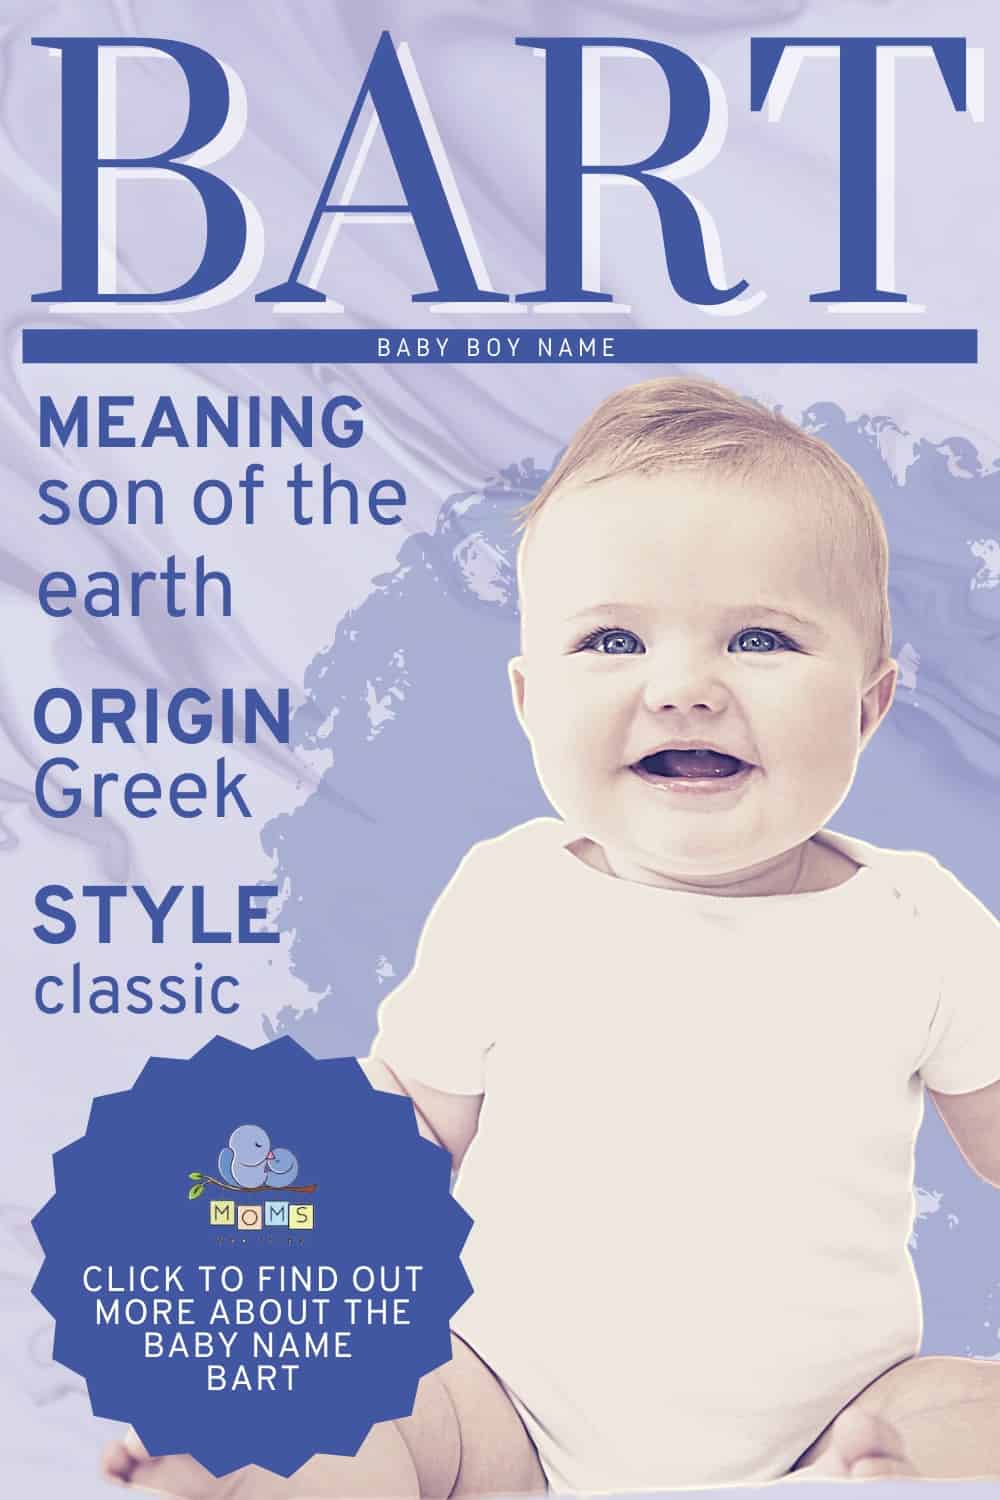 Baby name Bart